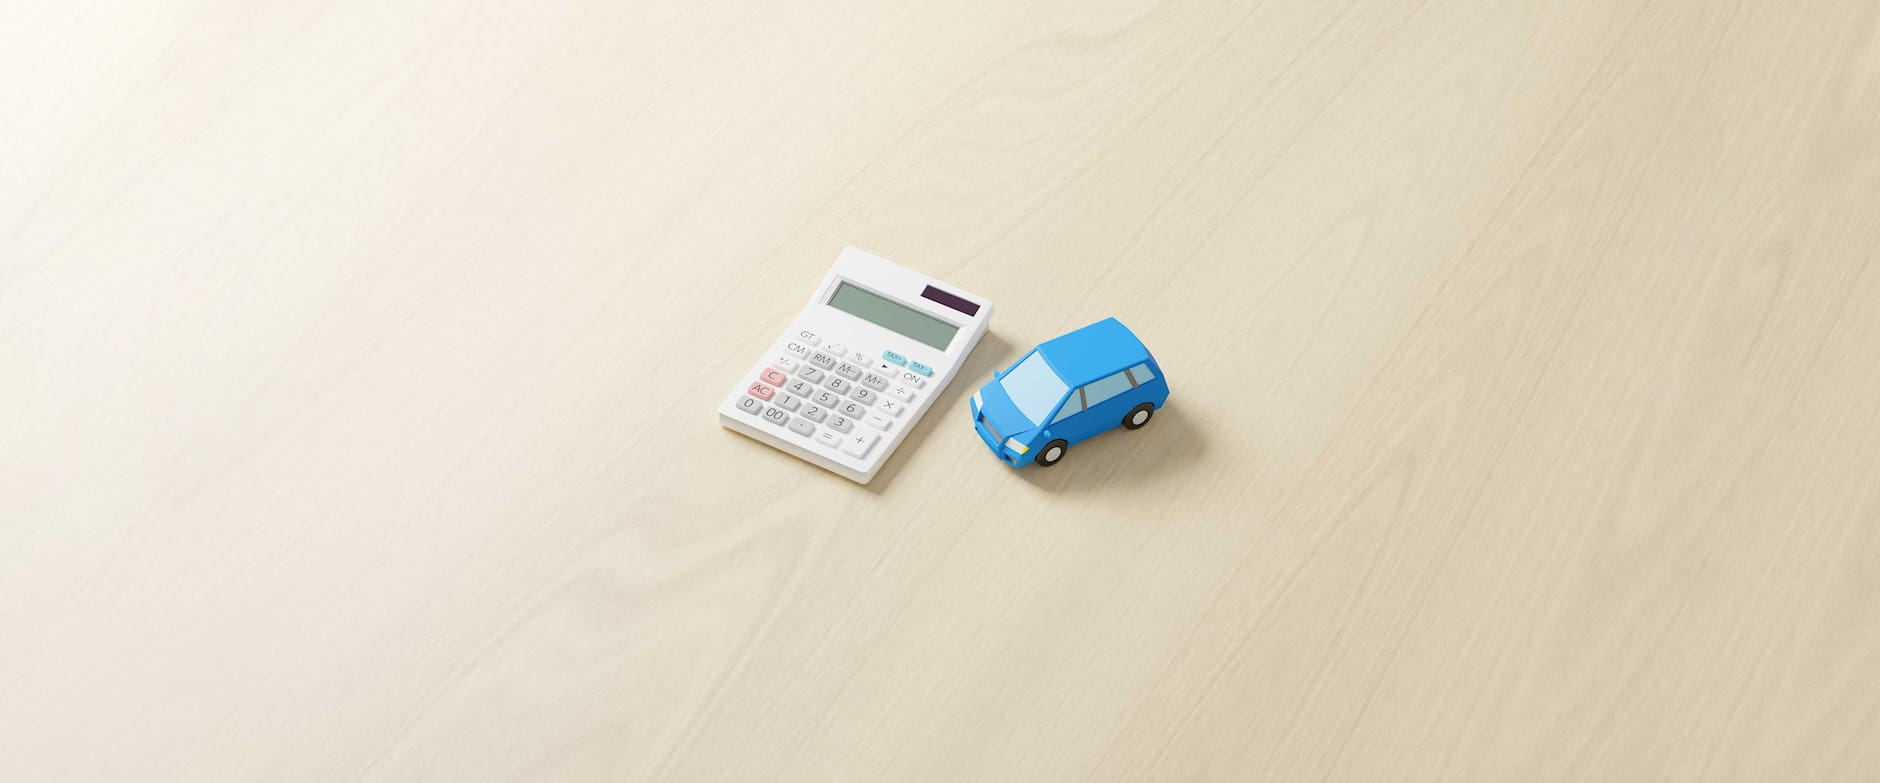 Car and calculator